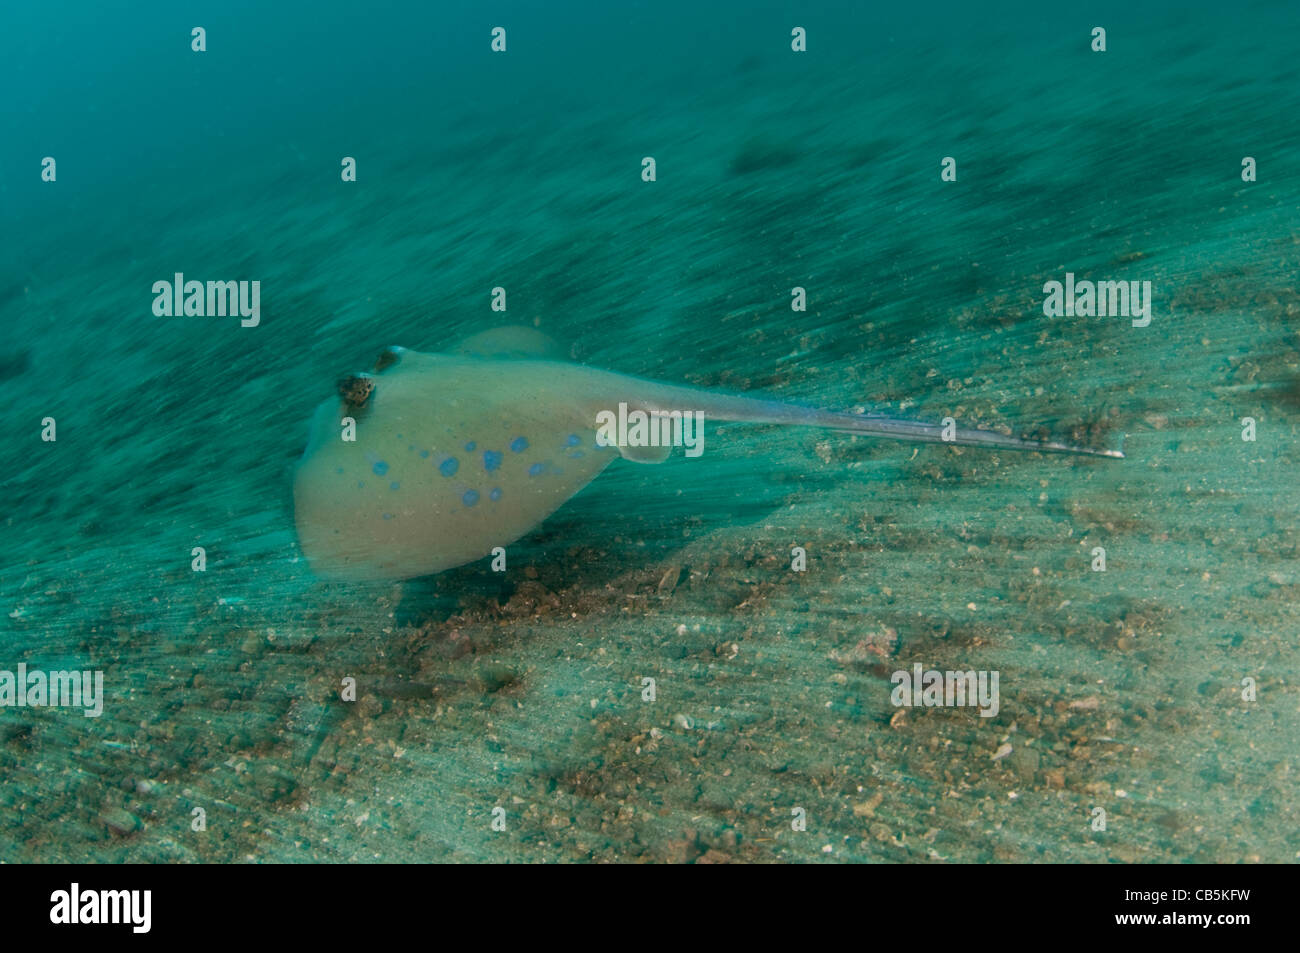 Blue Spotted stingray, Dasyatis kuhlii, Lembeh Strait, Bitung, Manado, North Sulawesi, Indonesia, Pacific Ocean Stock Photo